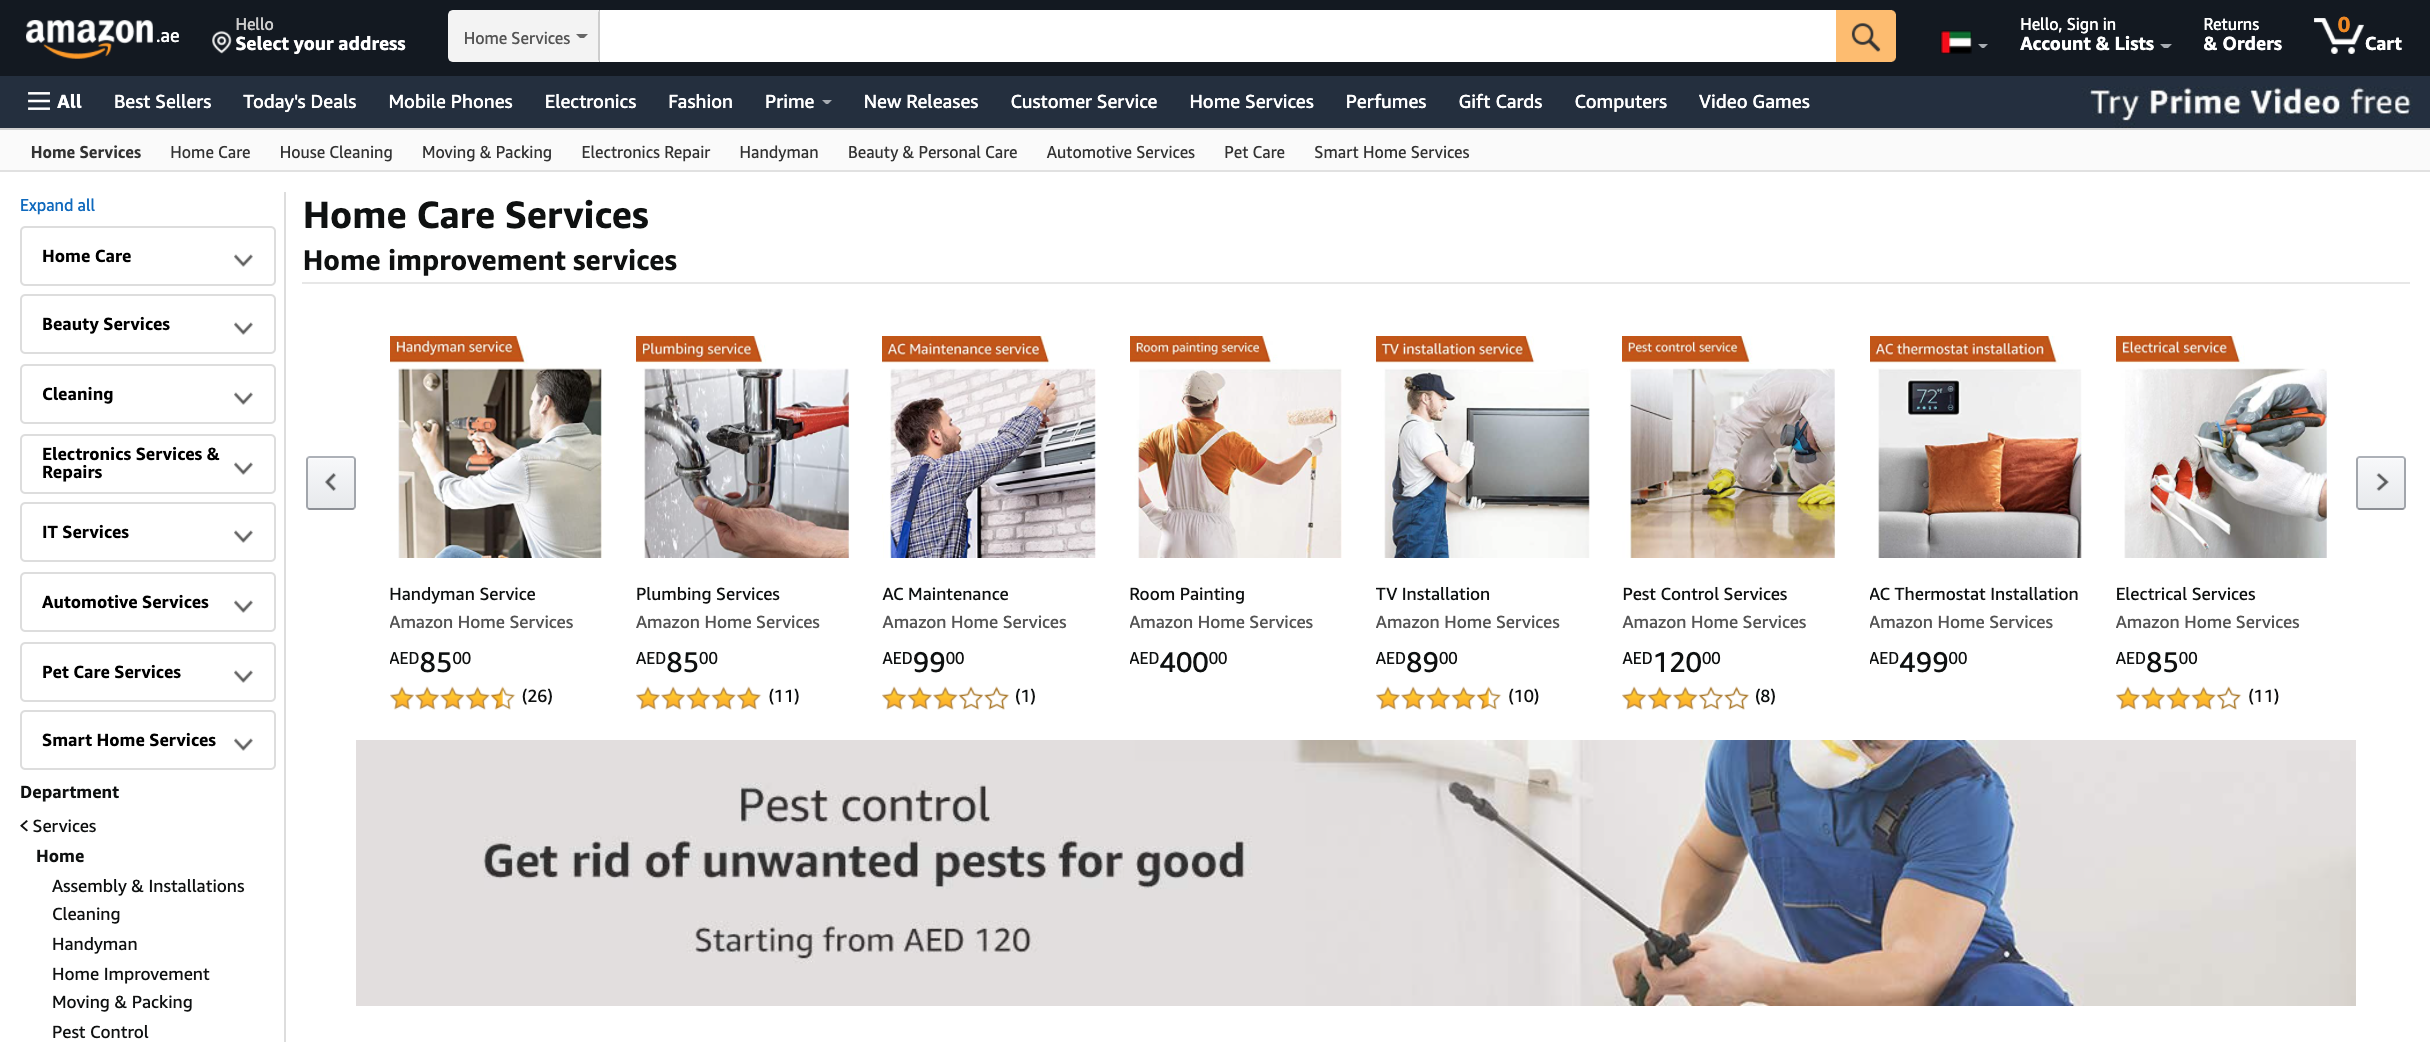 Amazon.ae Home Care Services